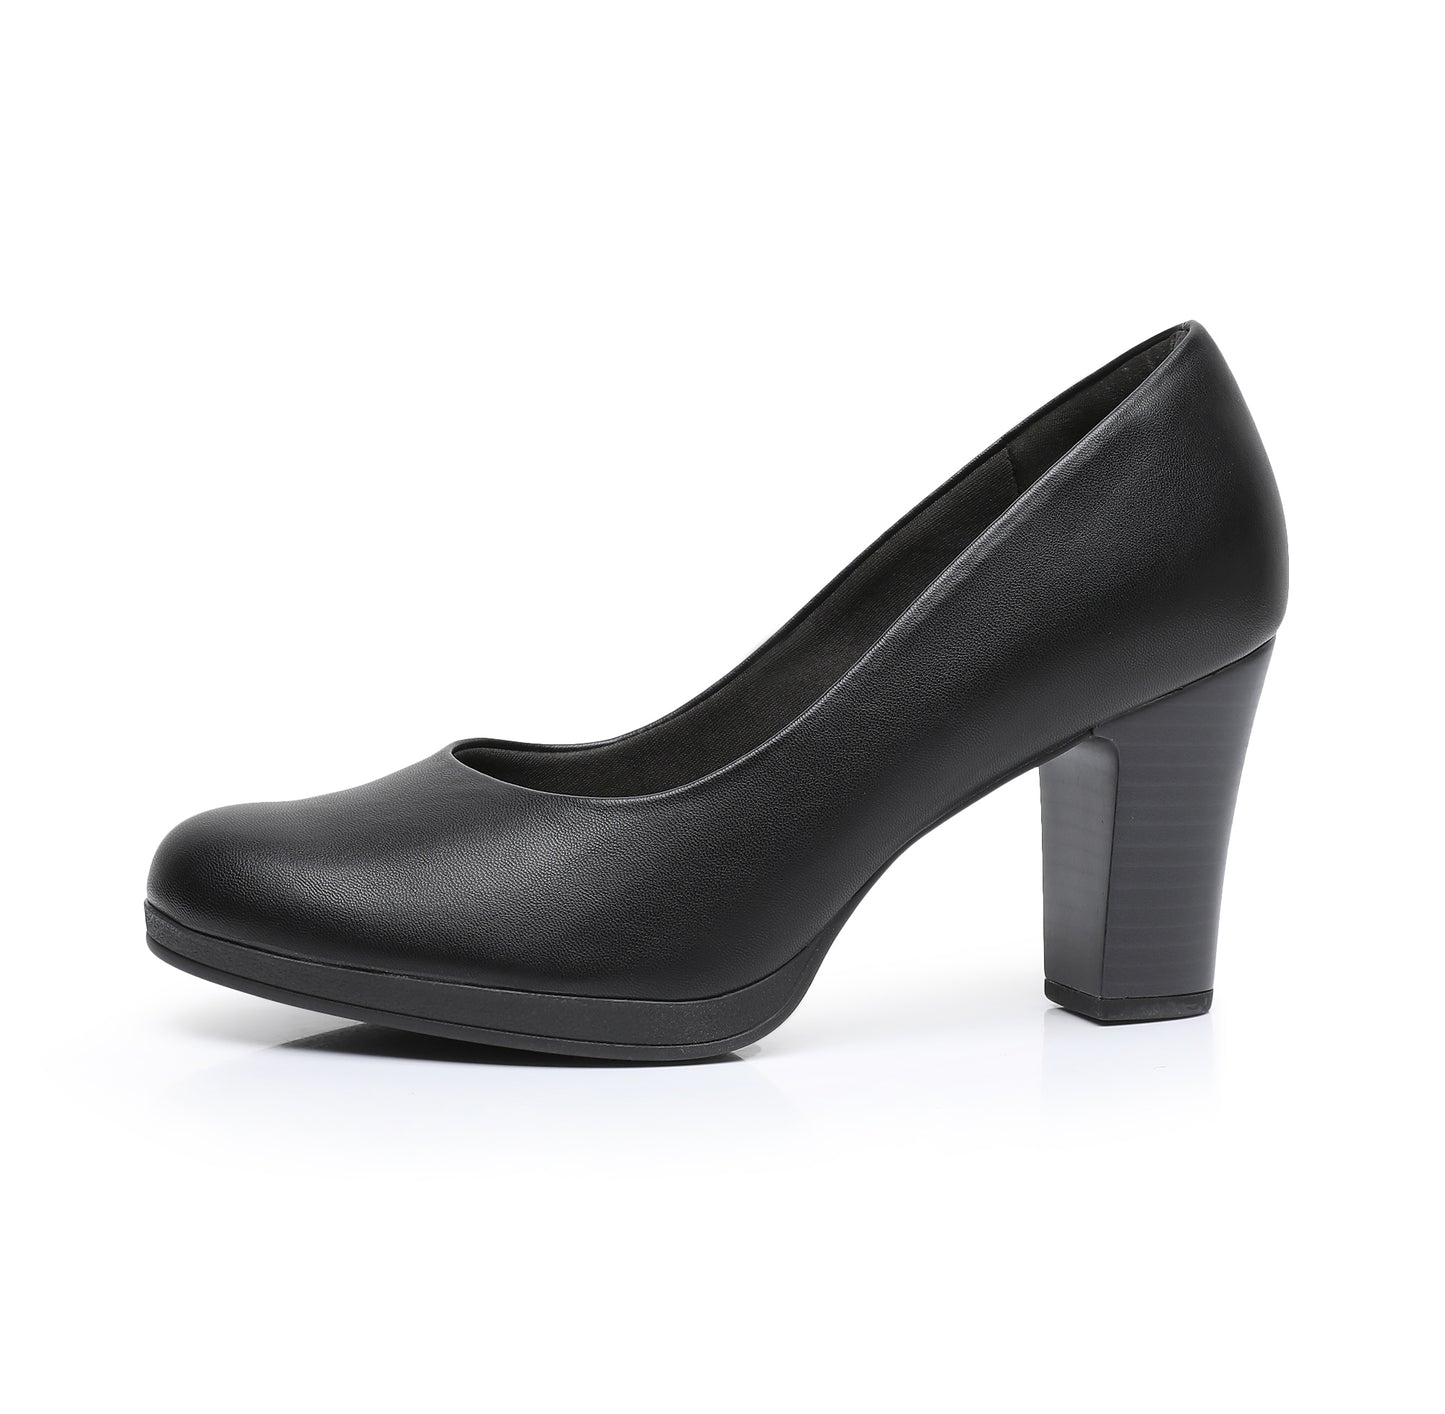 Luminous Glam Heels - Black (130.185)